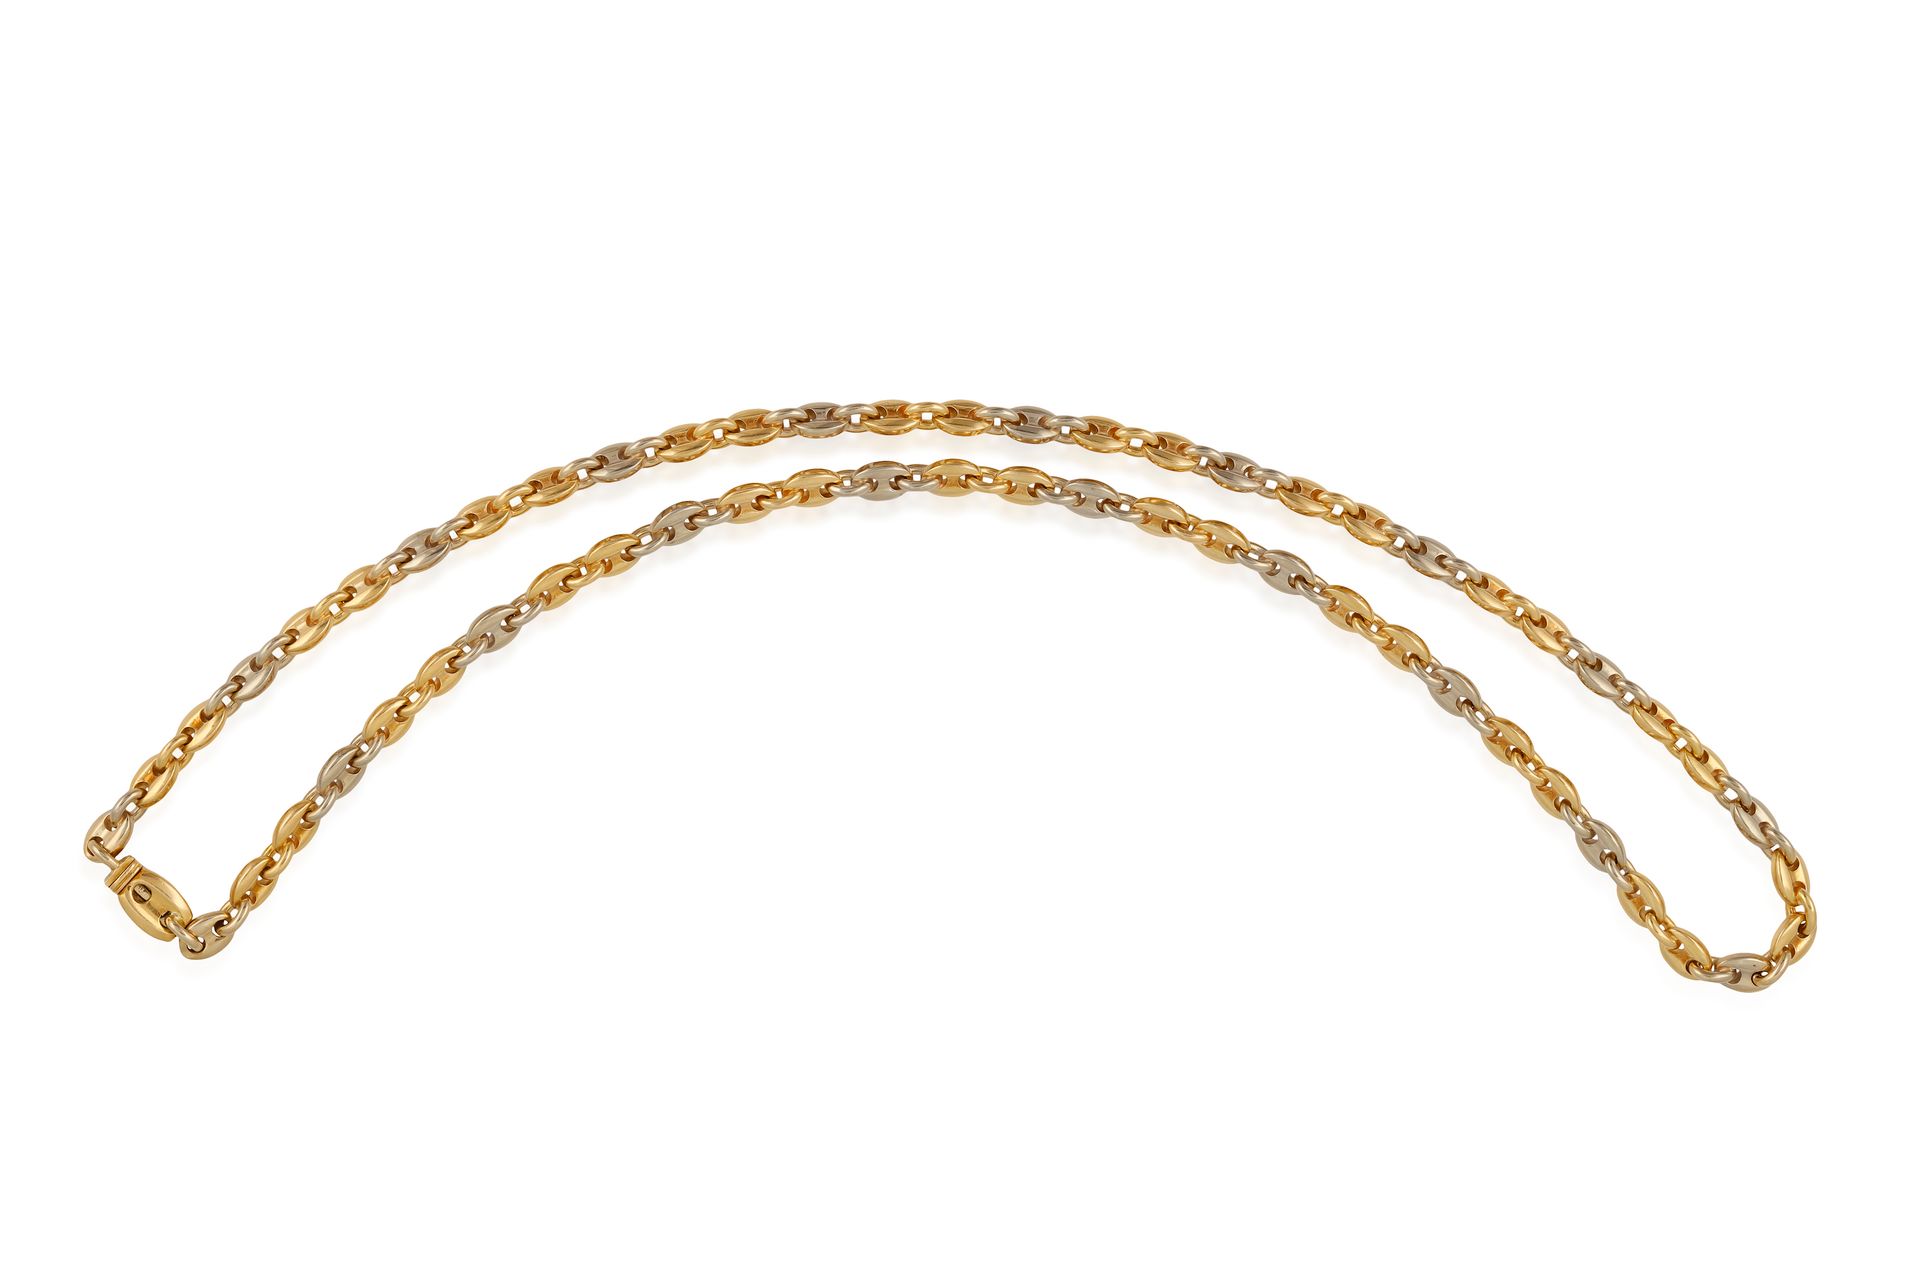 Null 卡地亚的金链子项链 由连续的抛光金咖啡豆链接组成，18K金，署名卡地亚，有编号，有 "Cartier Société Anonyme "的制造商标记，&hellip;